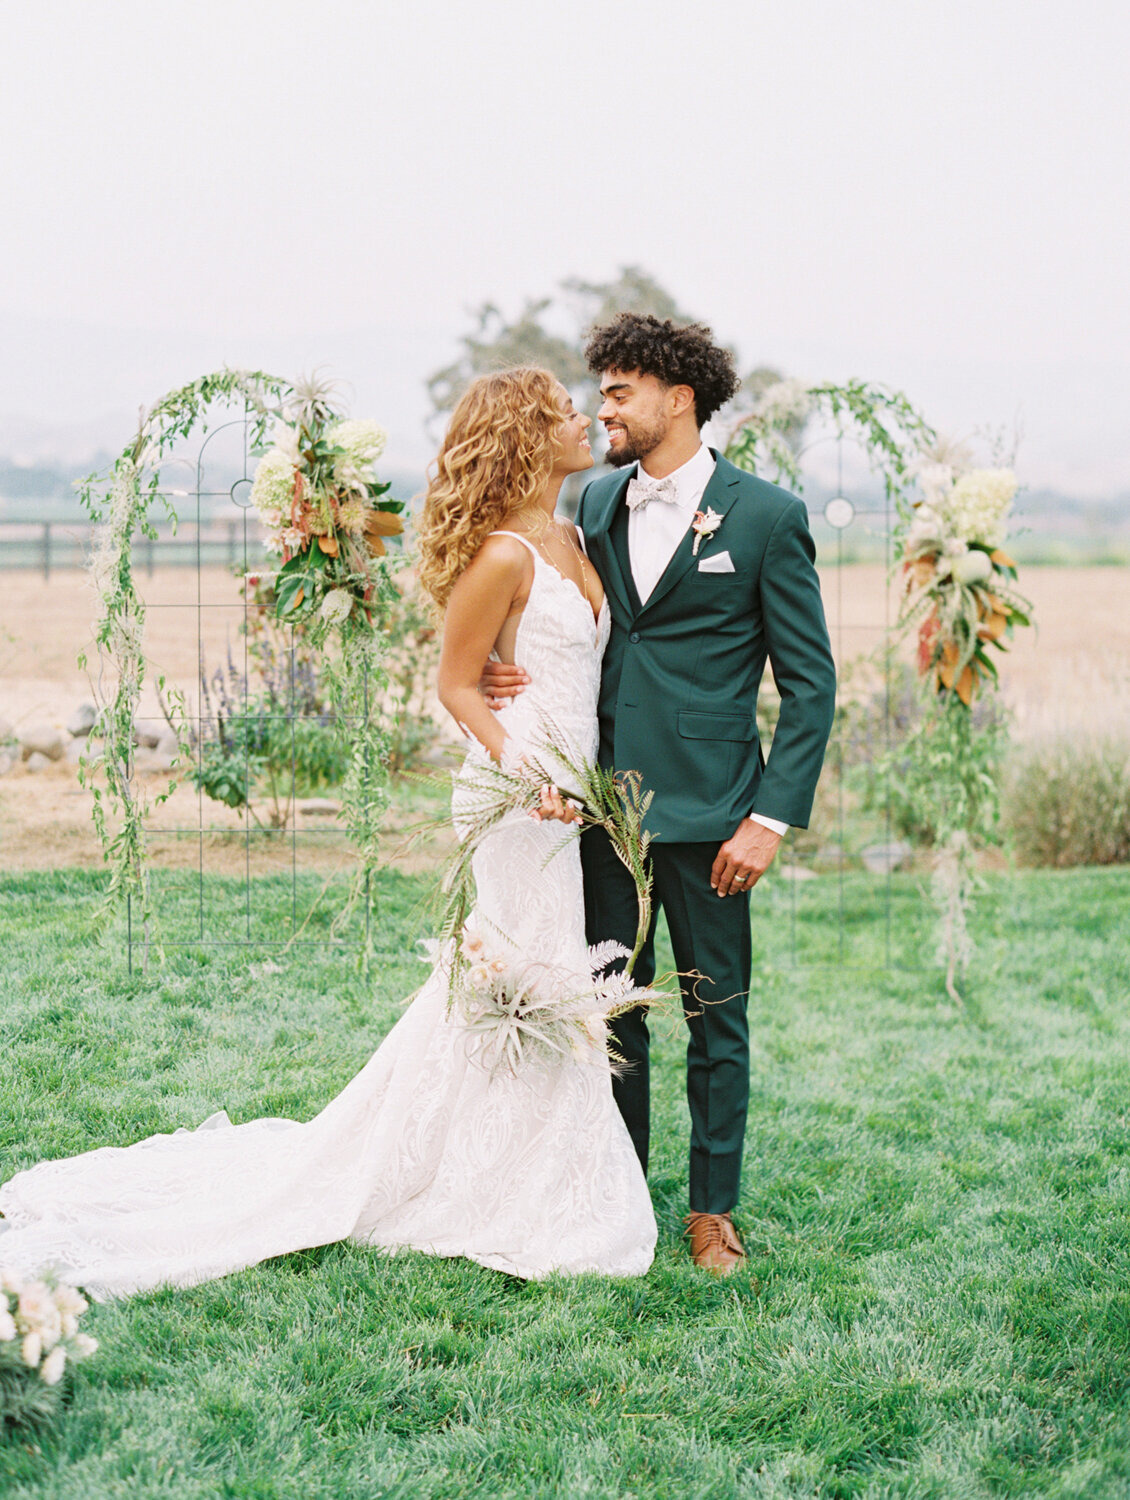 wisteria-photography.com | Wisteria Photography | Intimate Rose Garden Wedding | Santa Ynez | Featured on Green Wedding Shoes | Southern California Photographer-16.jpg